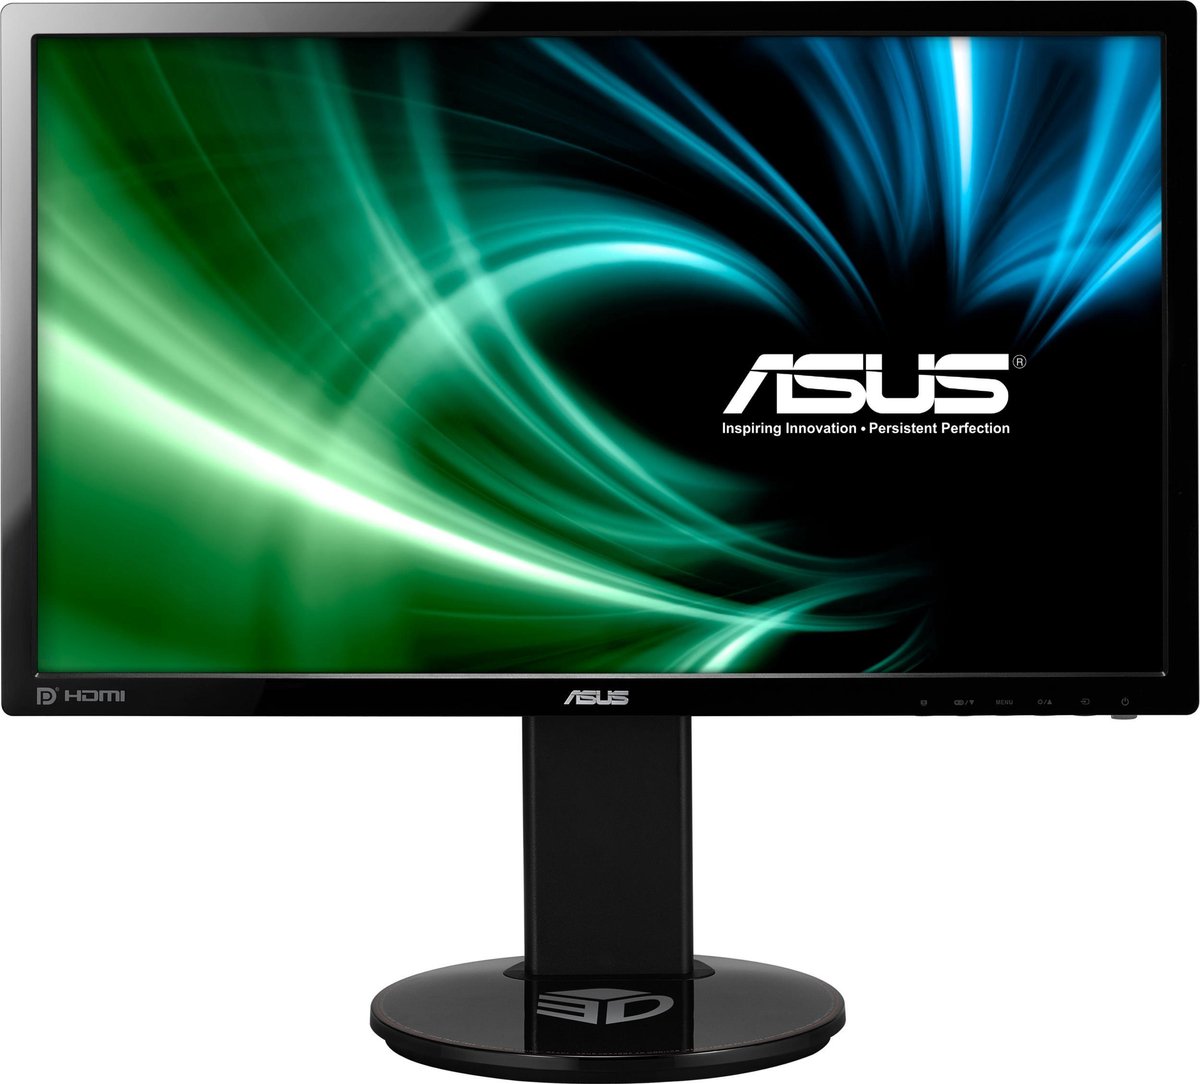 ASUS VG248QE - Full HD Gaming Monitor - 24 inch (1ms, 144 Hz) | bol.com